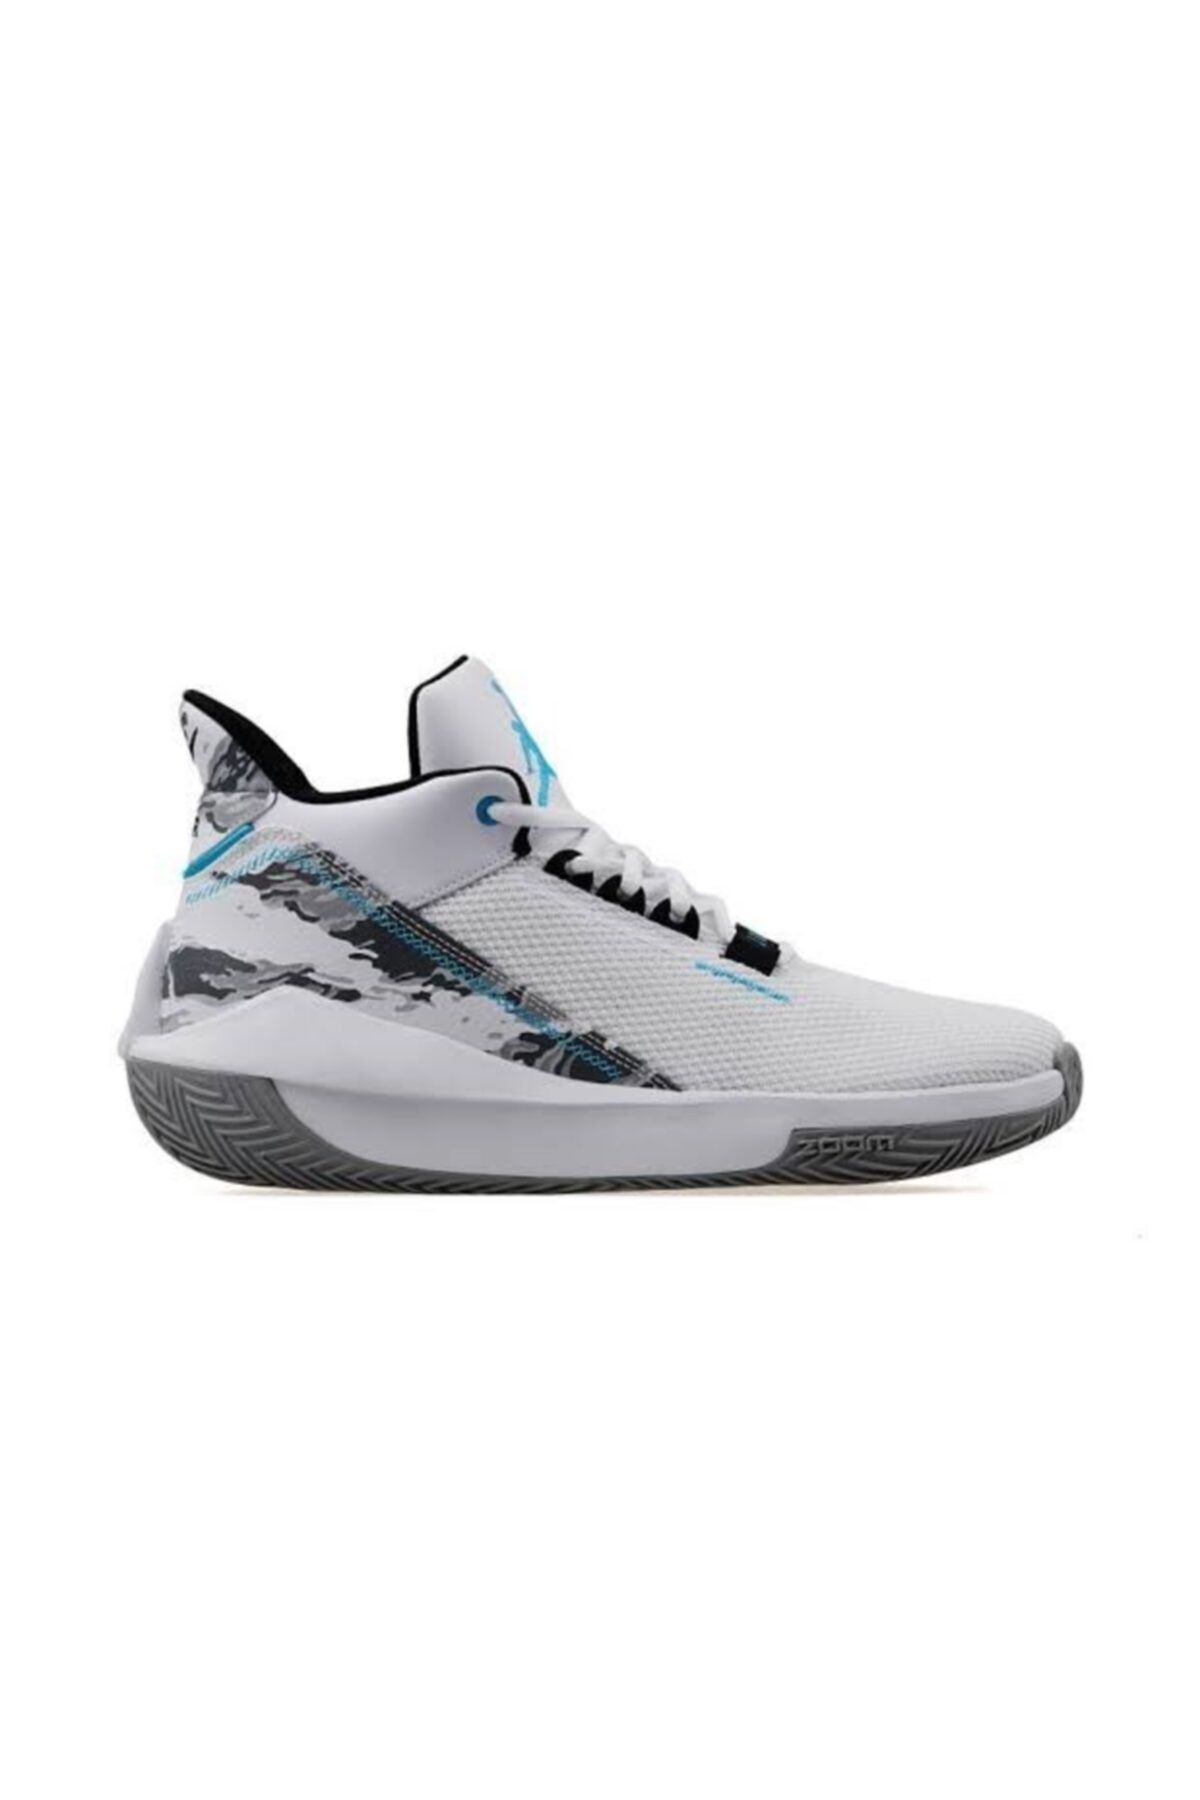 Nike Air Jordan 2x3 White Blue Fury Black Bq8737 104